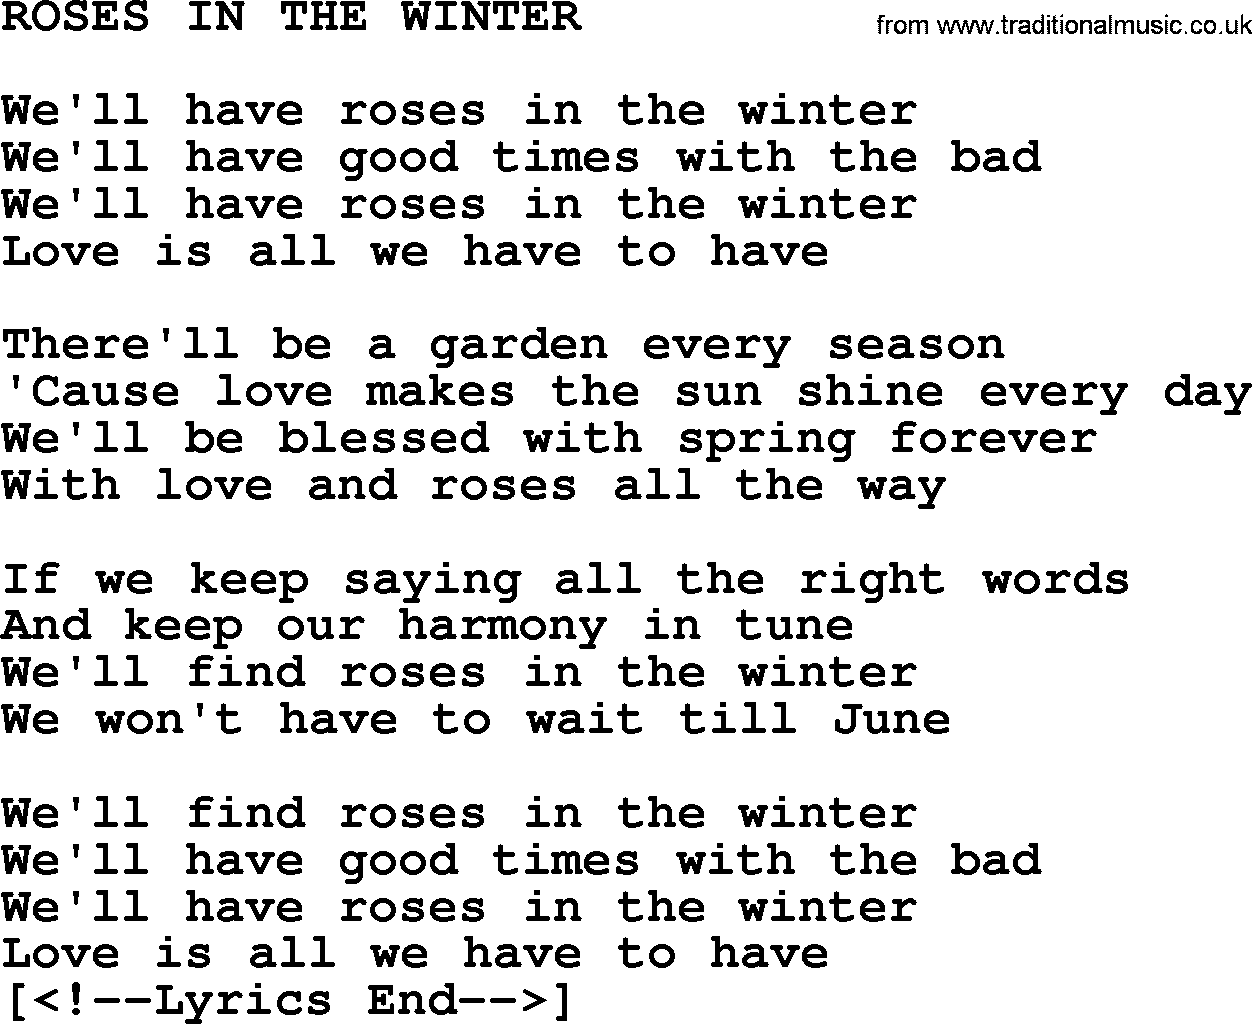 Merle Haggard song: Roses In The Winter, lyrics.